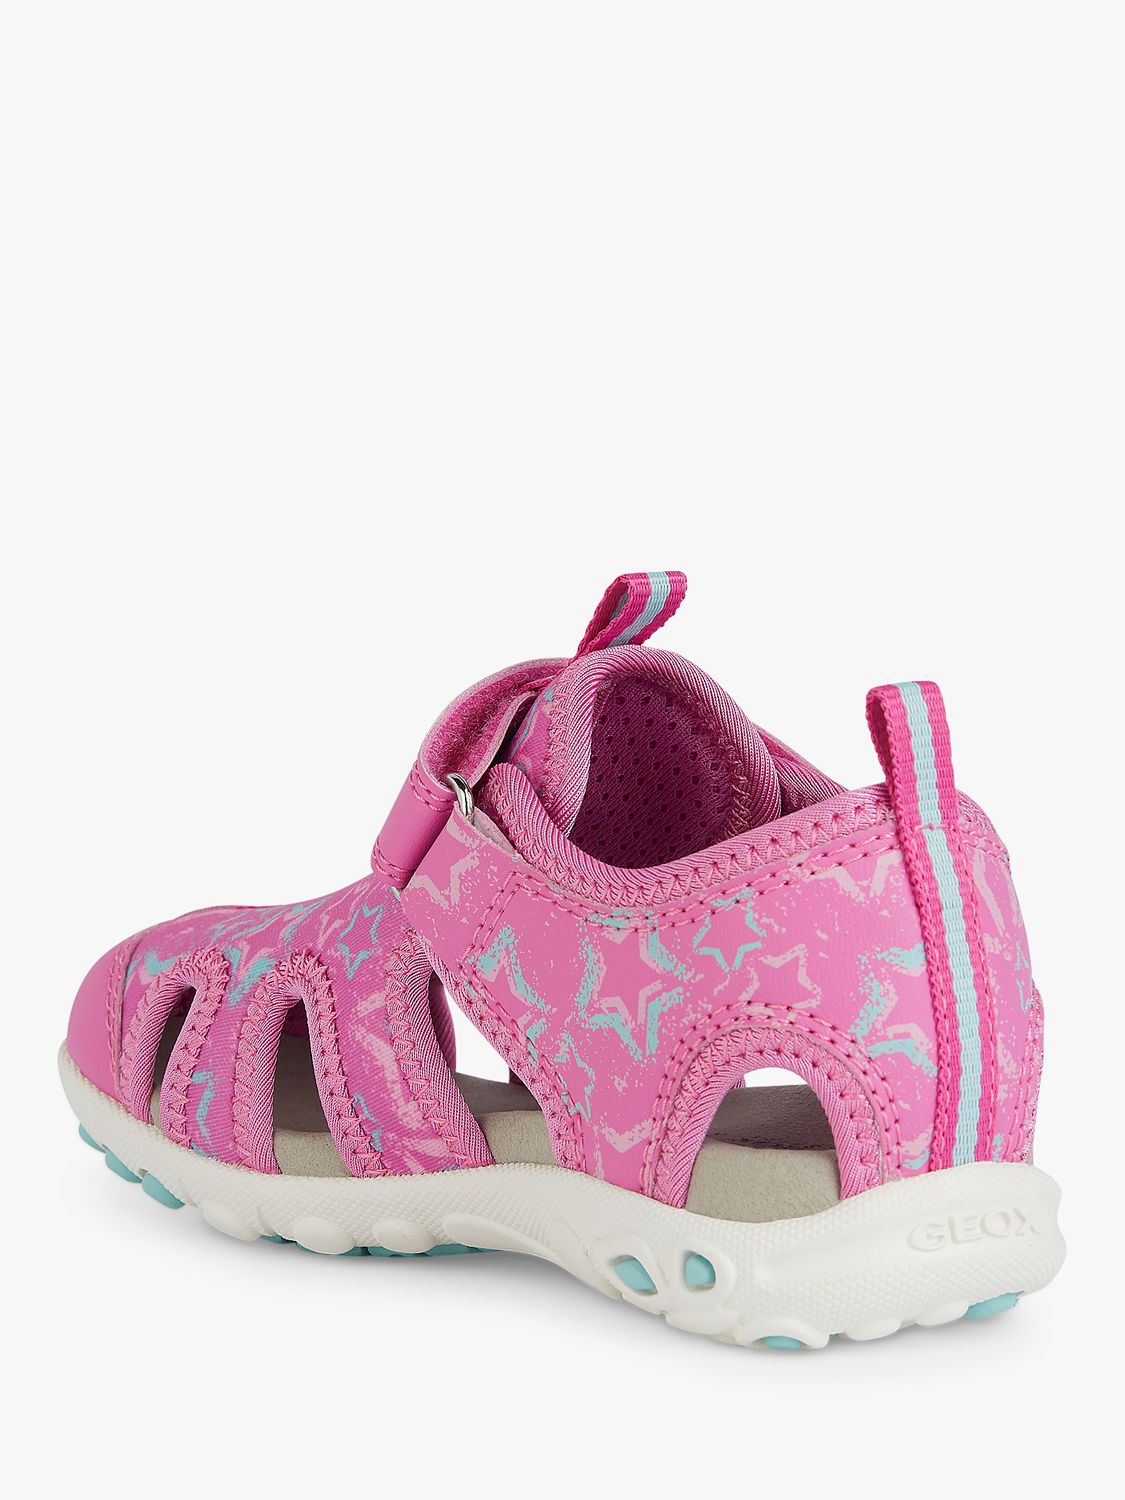 Geox Kids' Whinberry Star Print Closed Toe Sandals, Fuchsia/Aqua, EU29